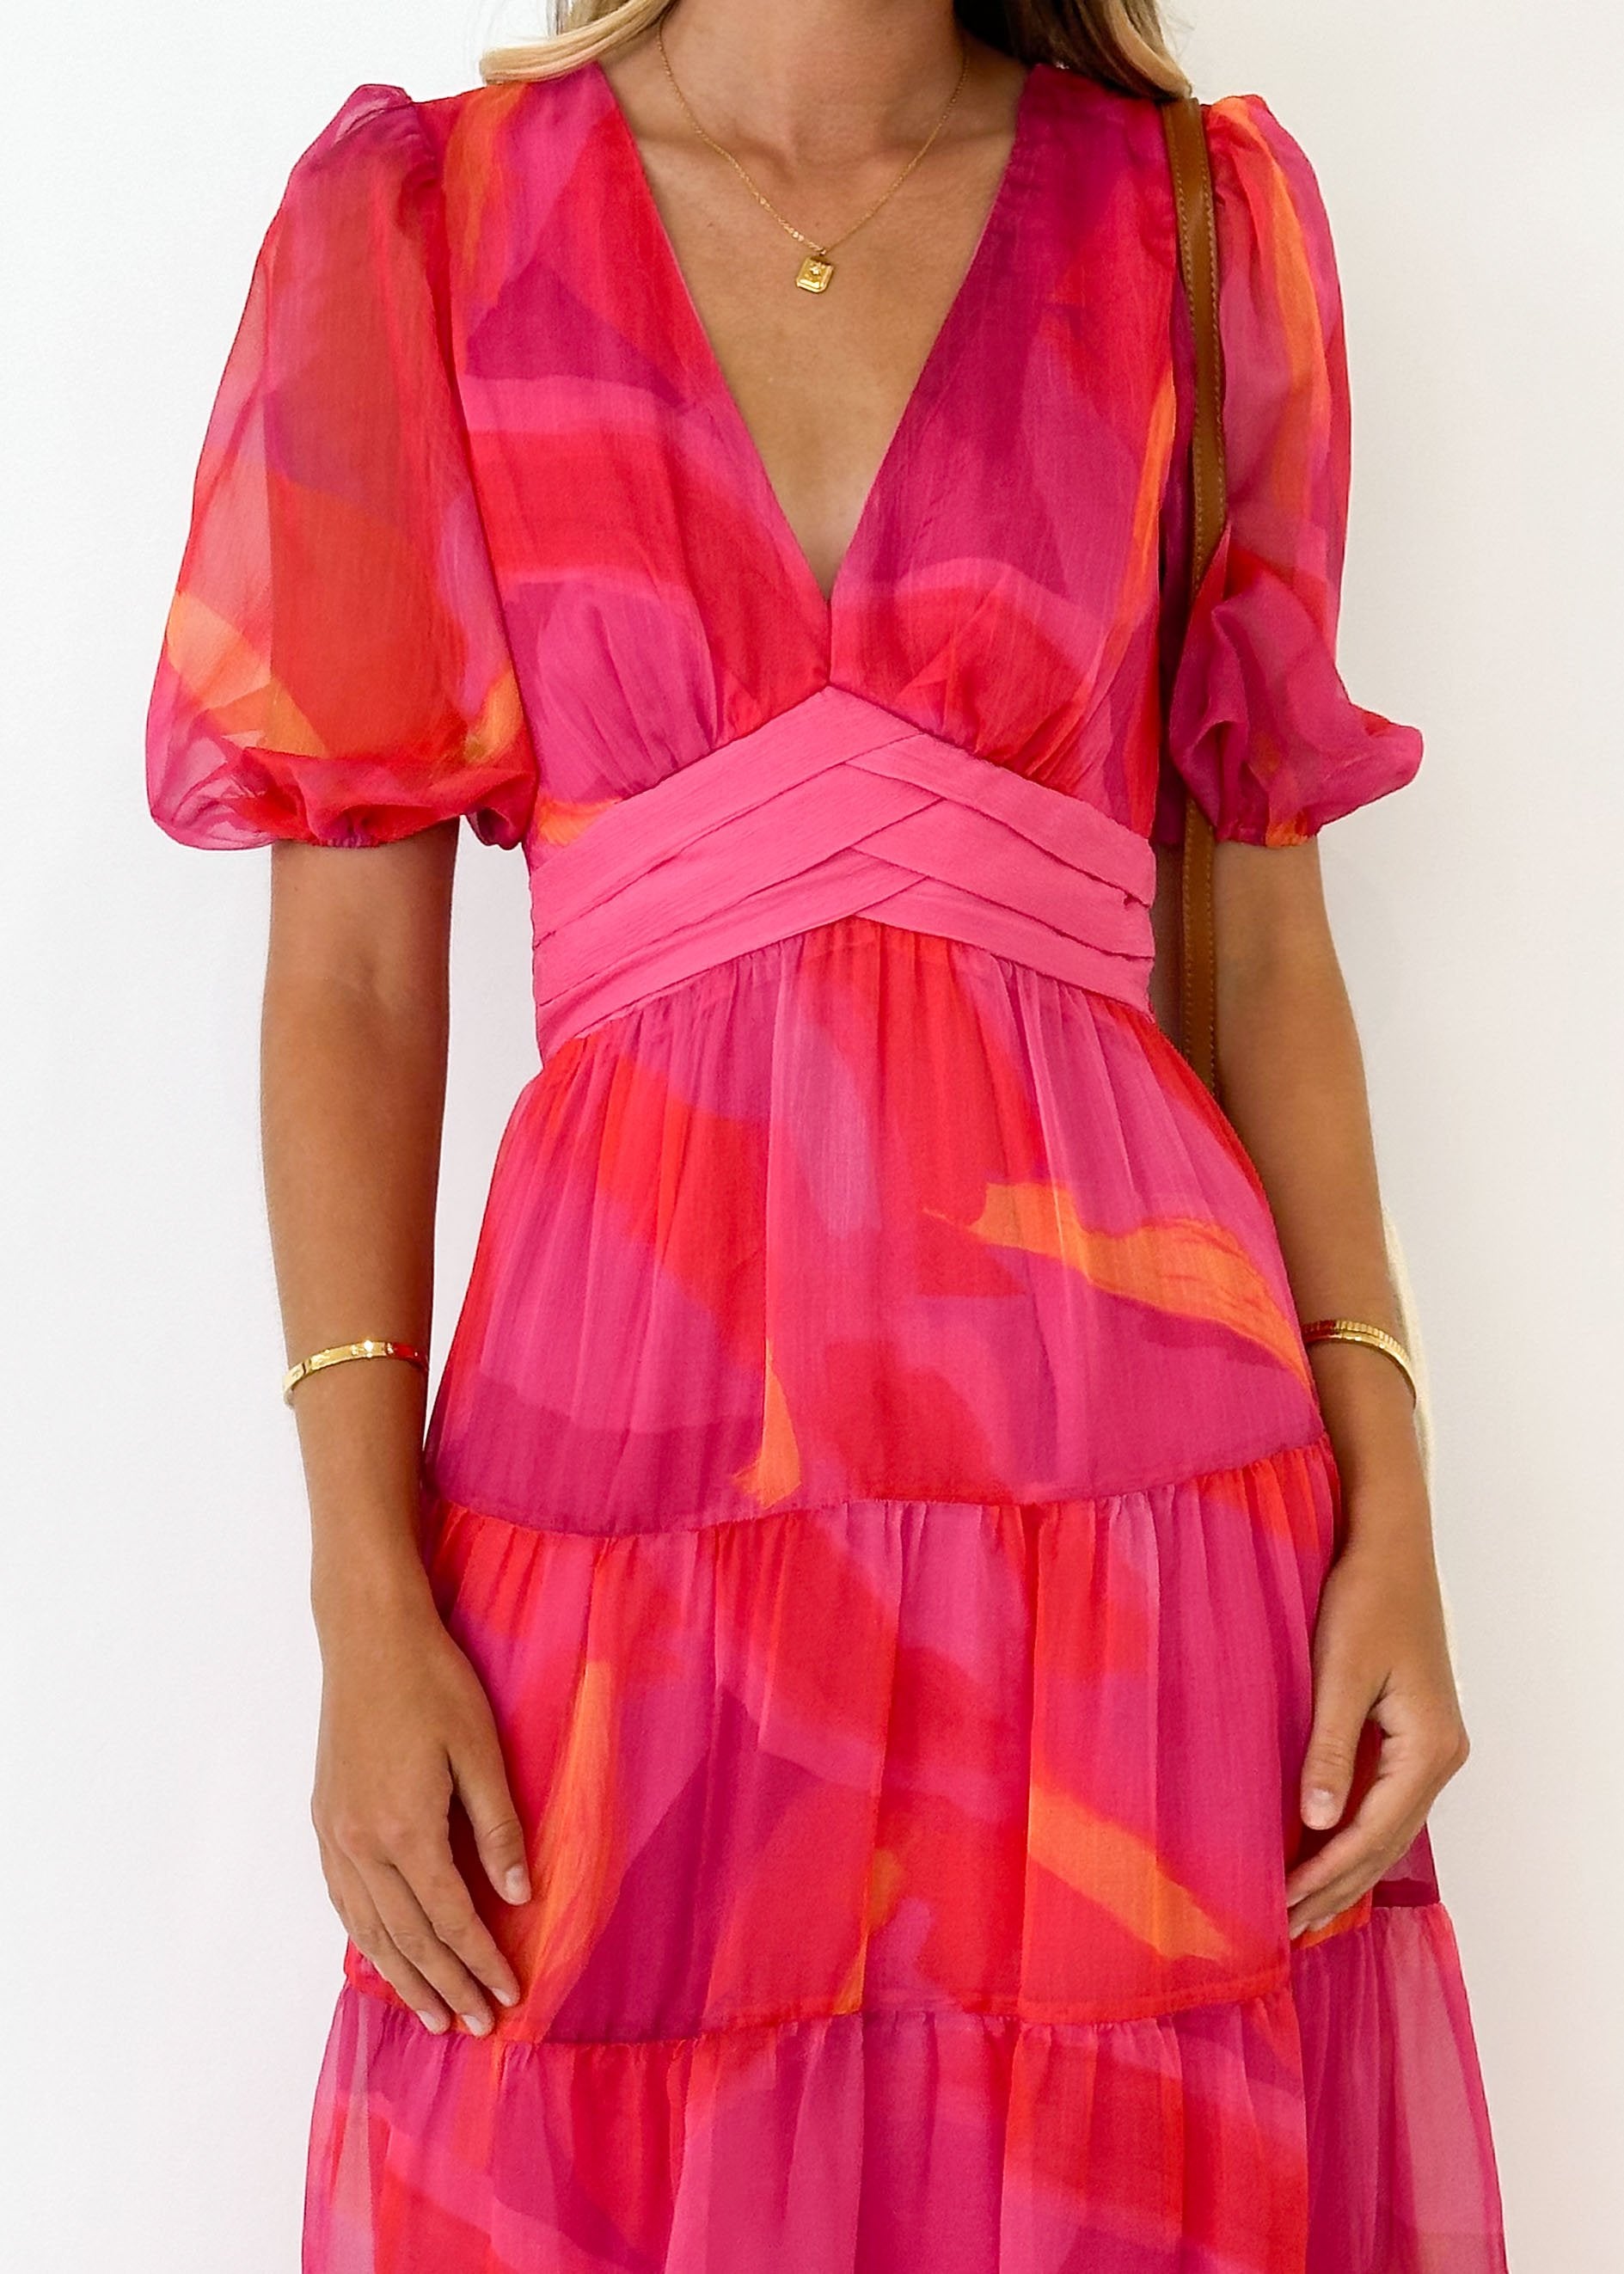 Laylor Maxi Dress - Hot Pink Splash